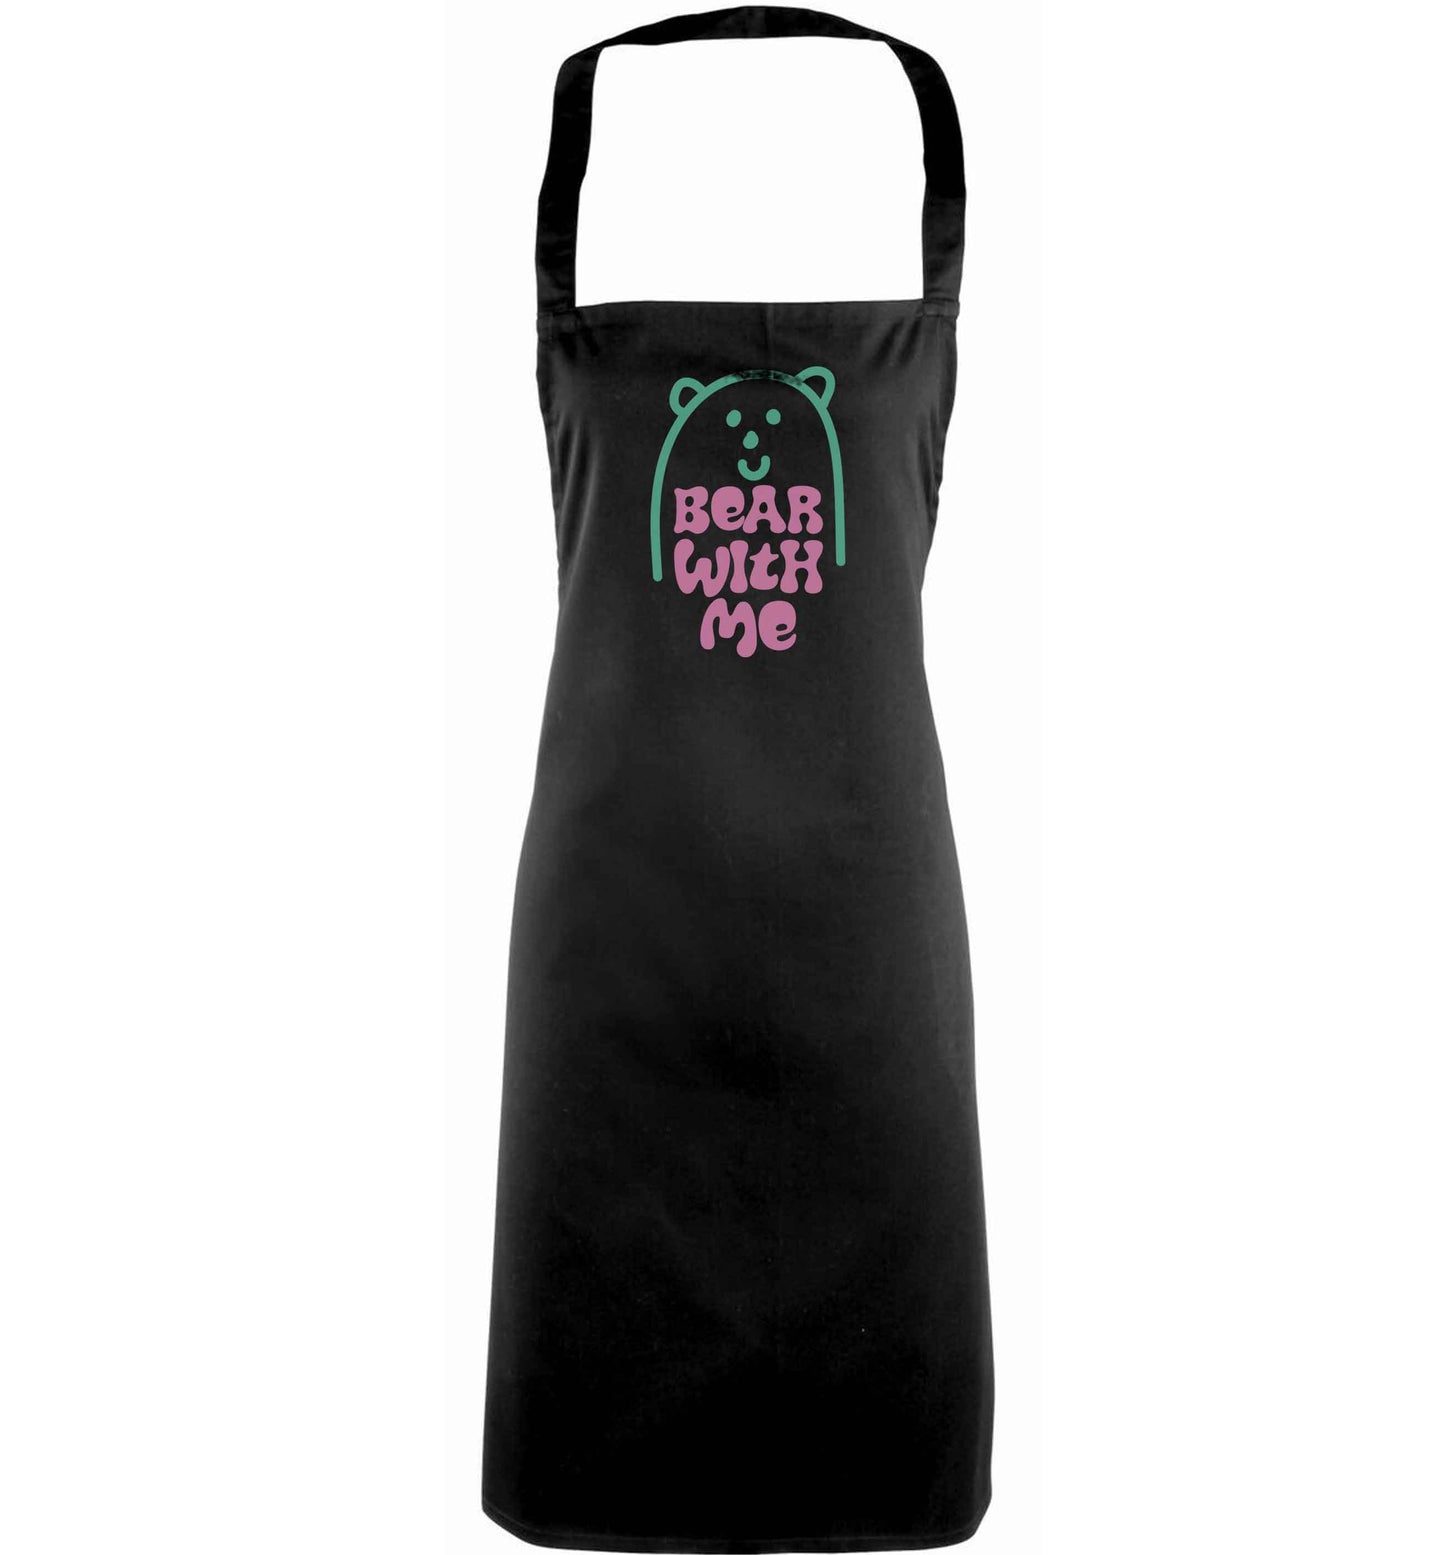 Bear With Me Kit adults black apron